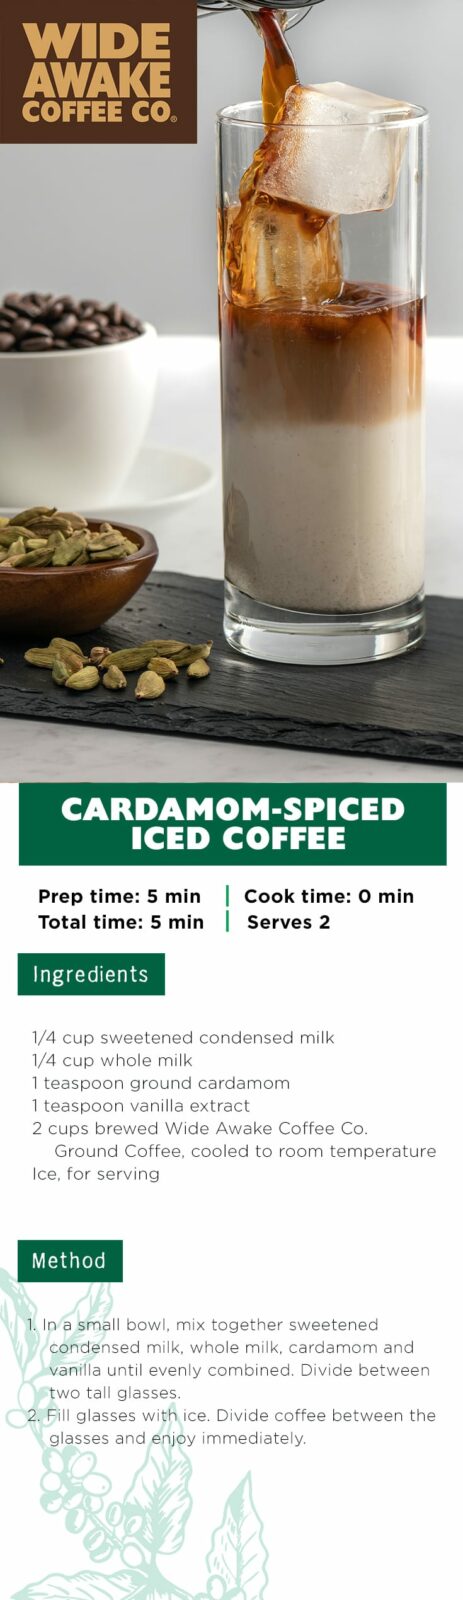 WideAwake_PinterestPinPinterest_Cardamom-Spiced Iced Coffee